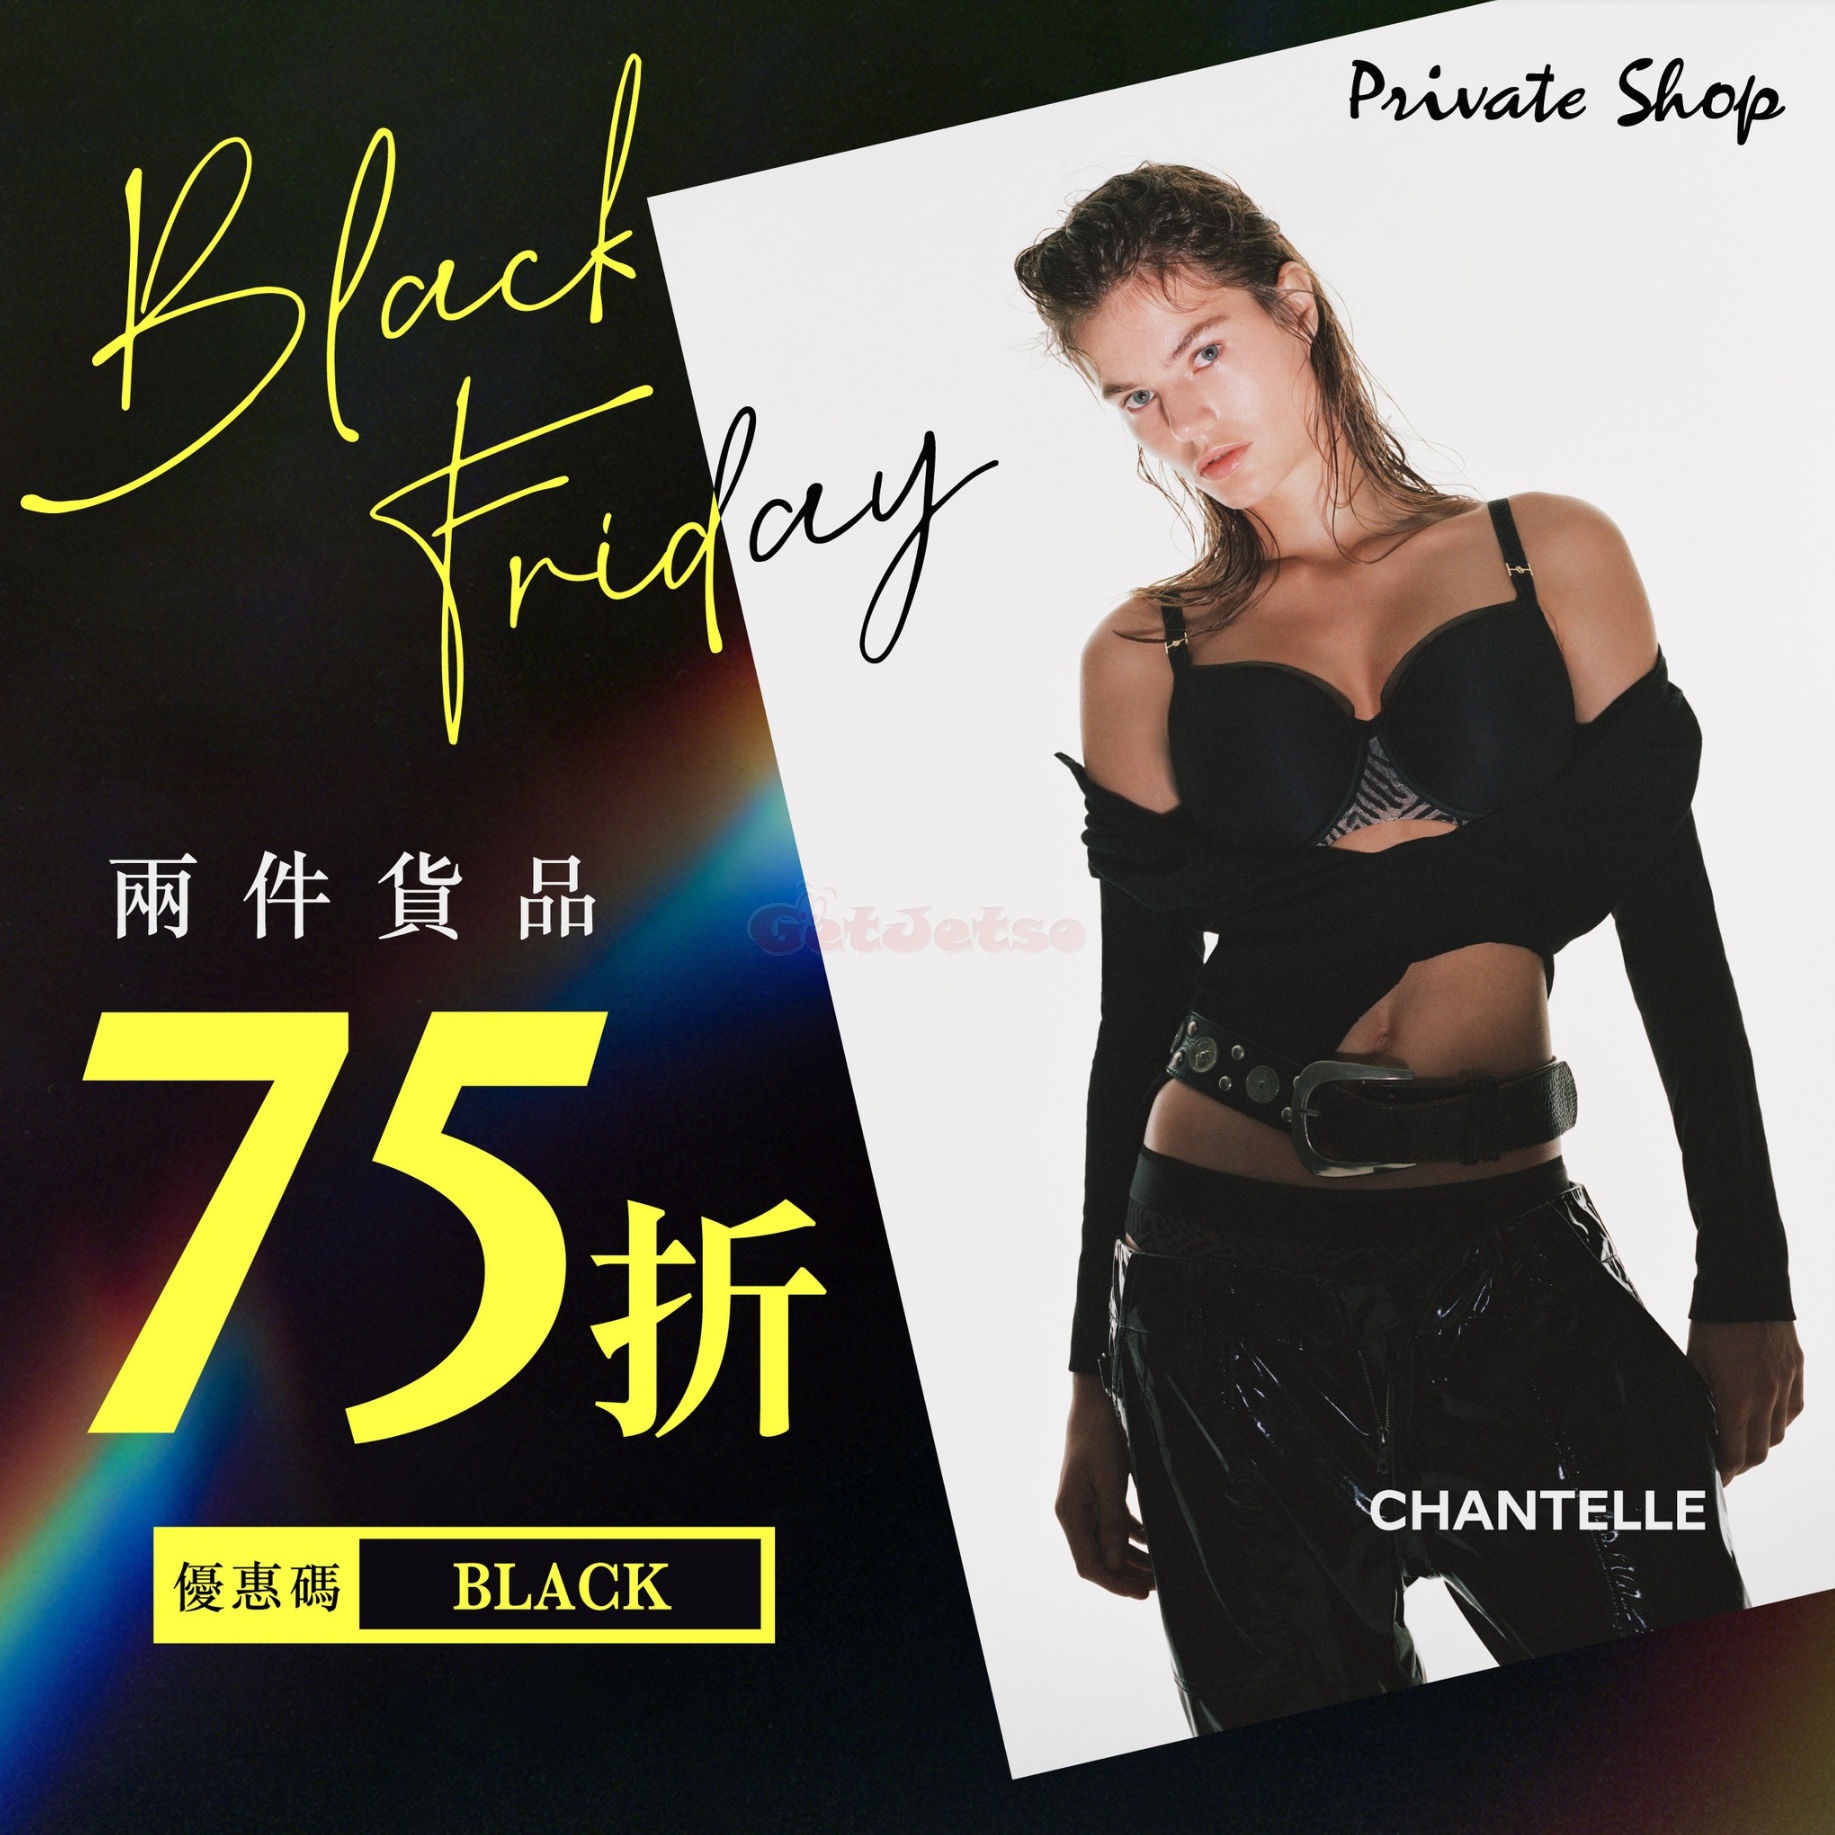 Private Shop：BLACK FRIDAY 75折優惠(23年11月17-27日)圖片1